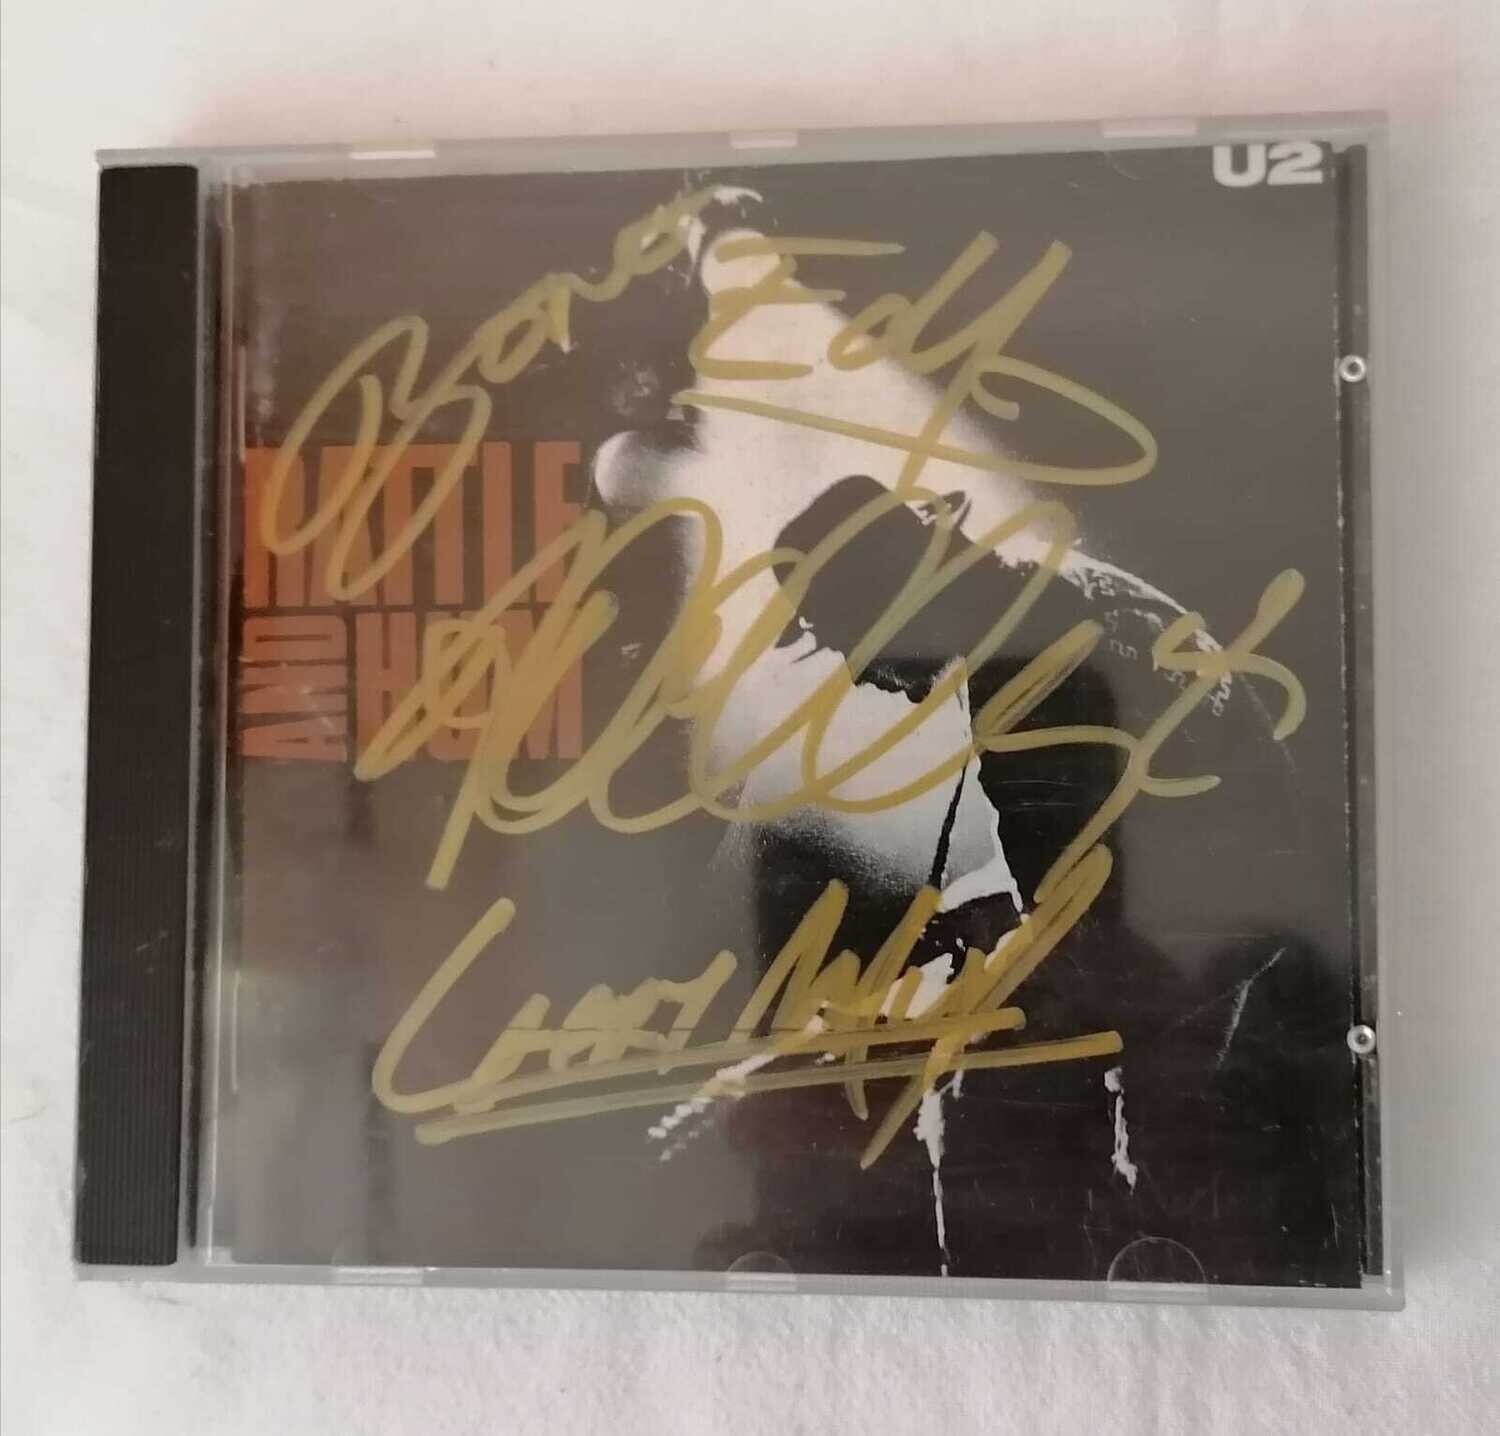 CD U2 AUTOGRAFATO U2 CD Autografata U2 GROUP CD SIGNED AUTOGRAPH Signed Autograph Hand Signed U2 Autografato